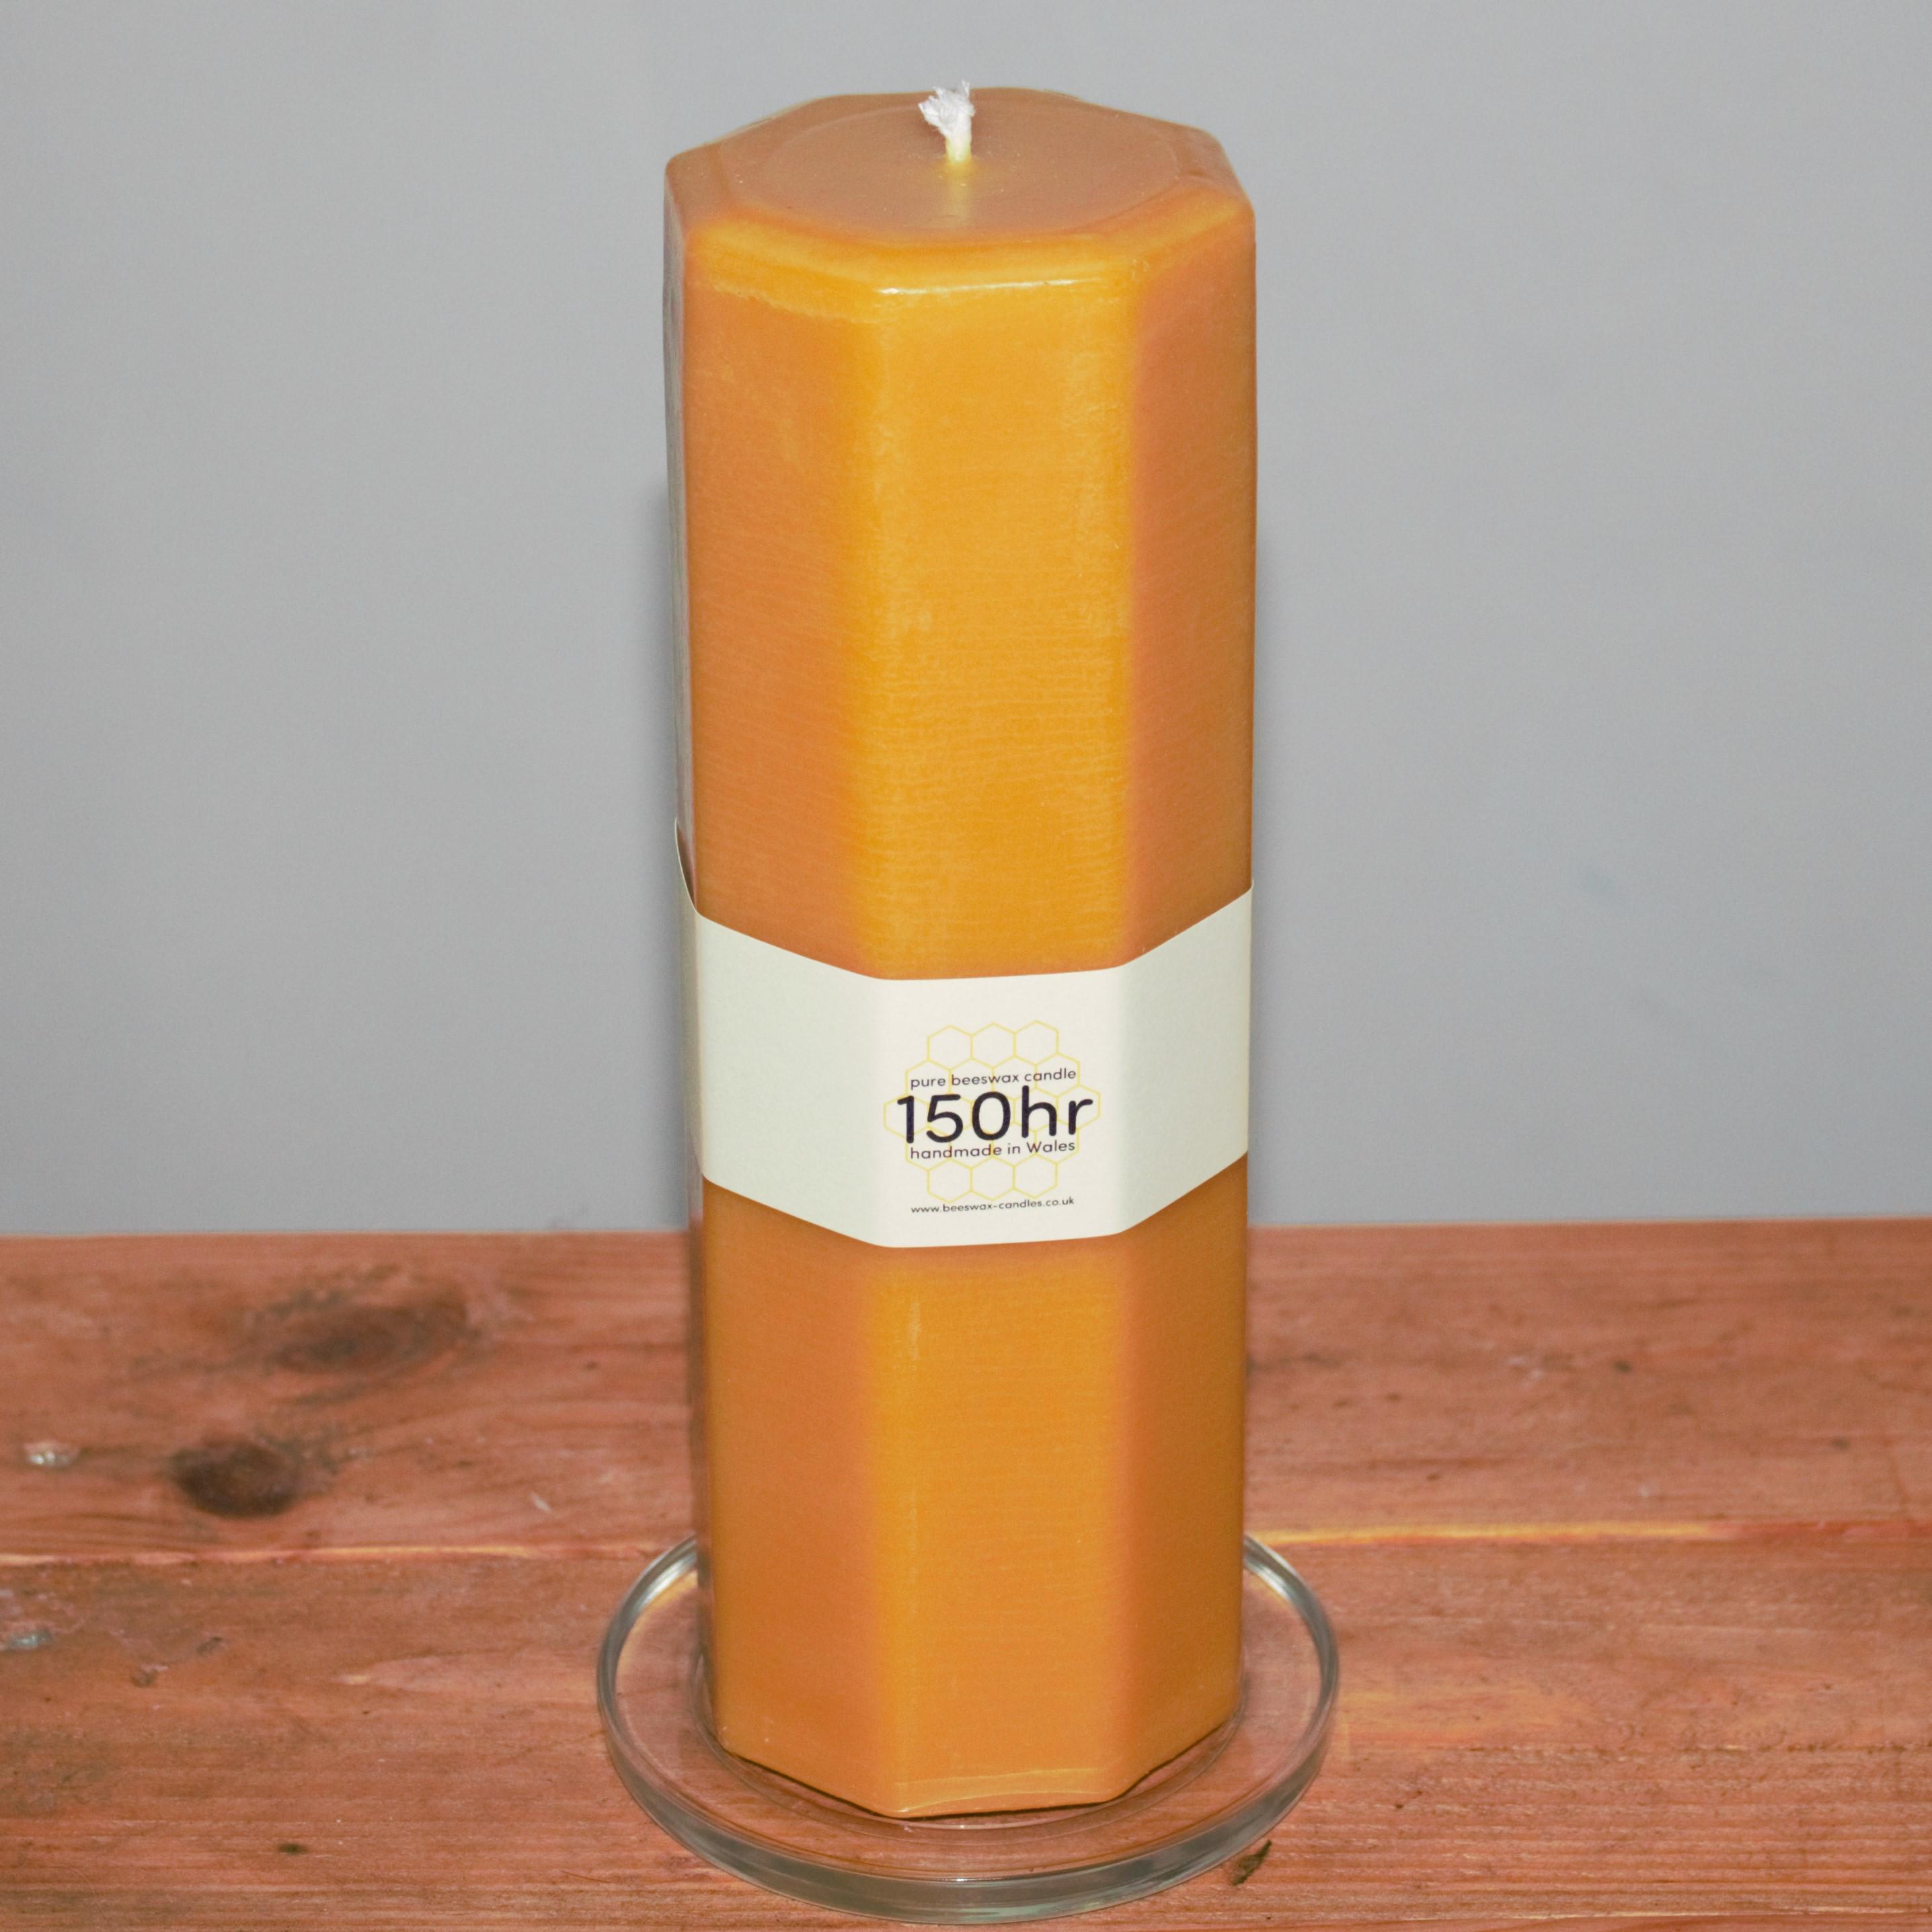 150 hour pure beeswax octagonal beeswax pillar candle